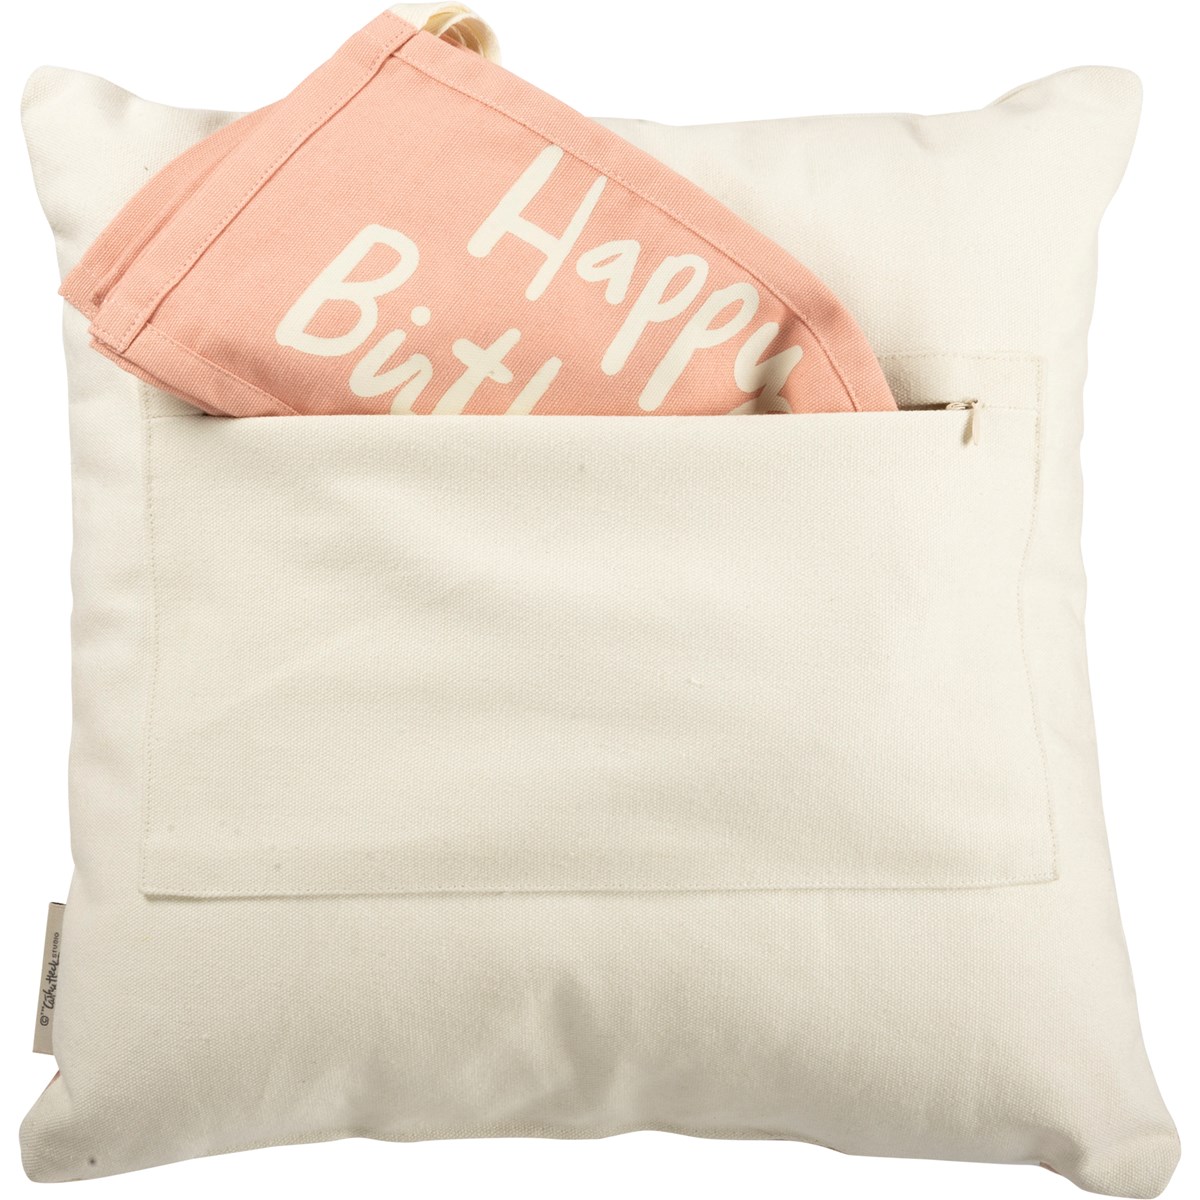 Milestone Pillow - Mermaid - 15" x 15" - Cotton, Polyester, Ribbon, Zipper